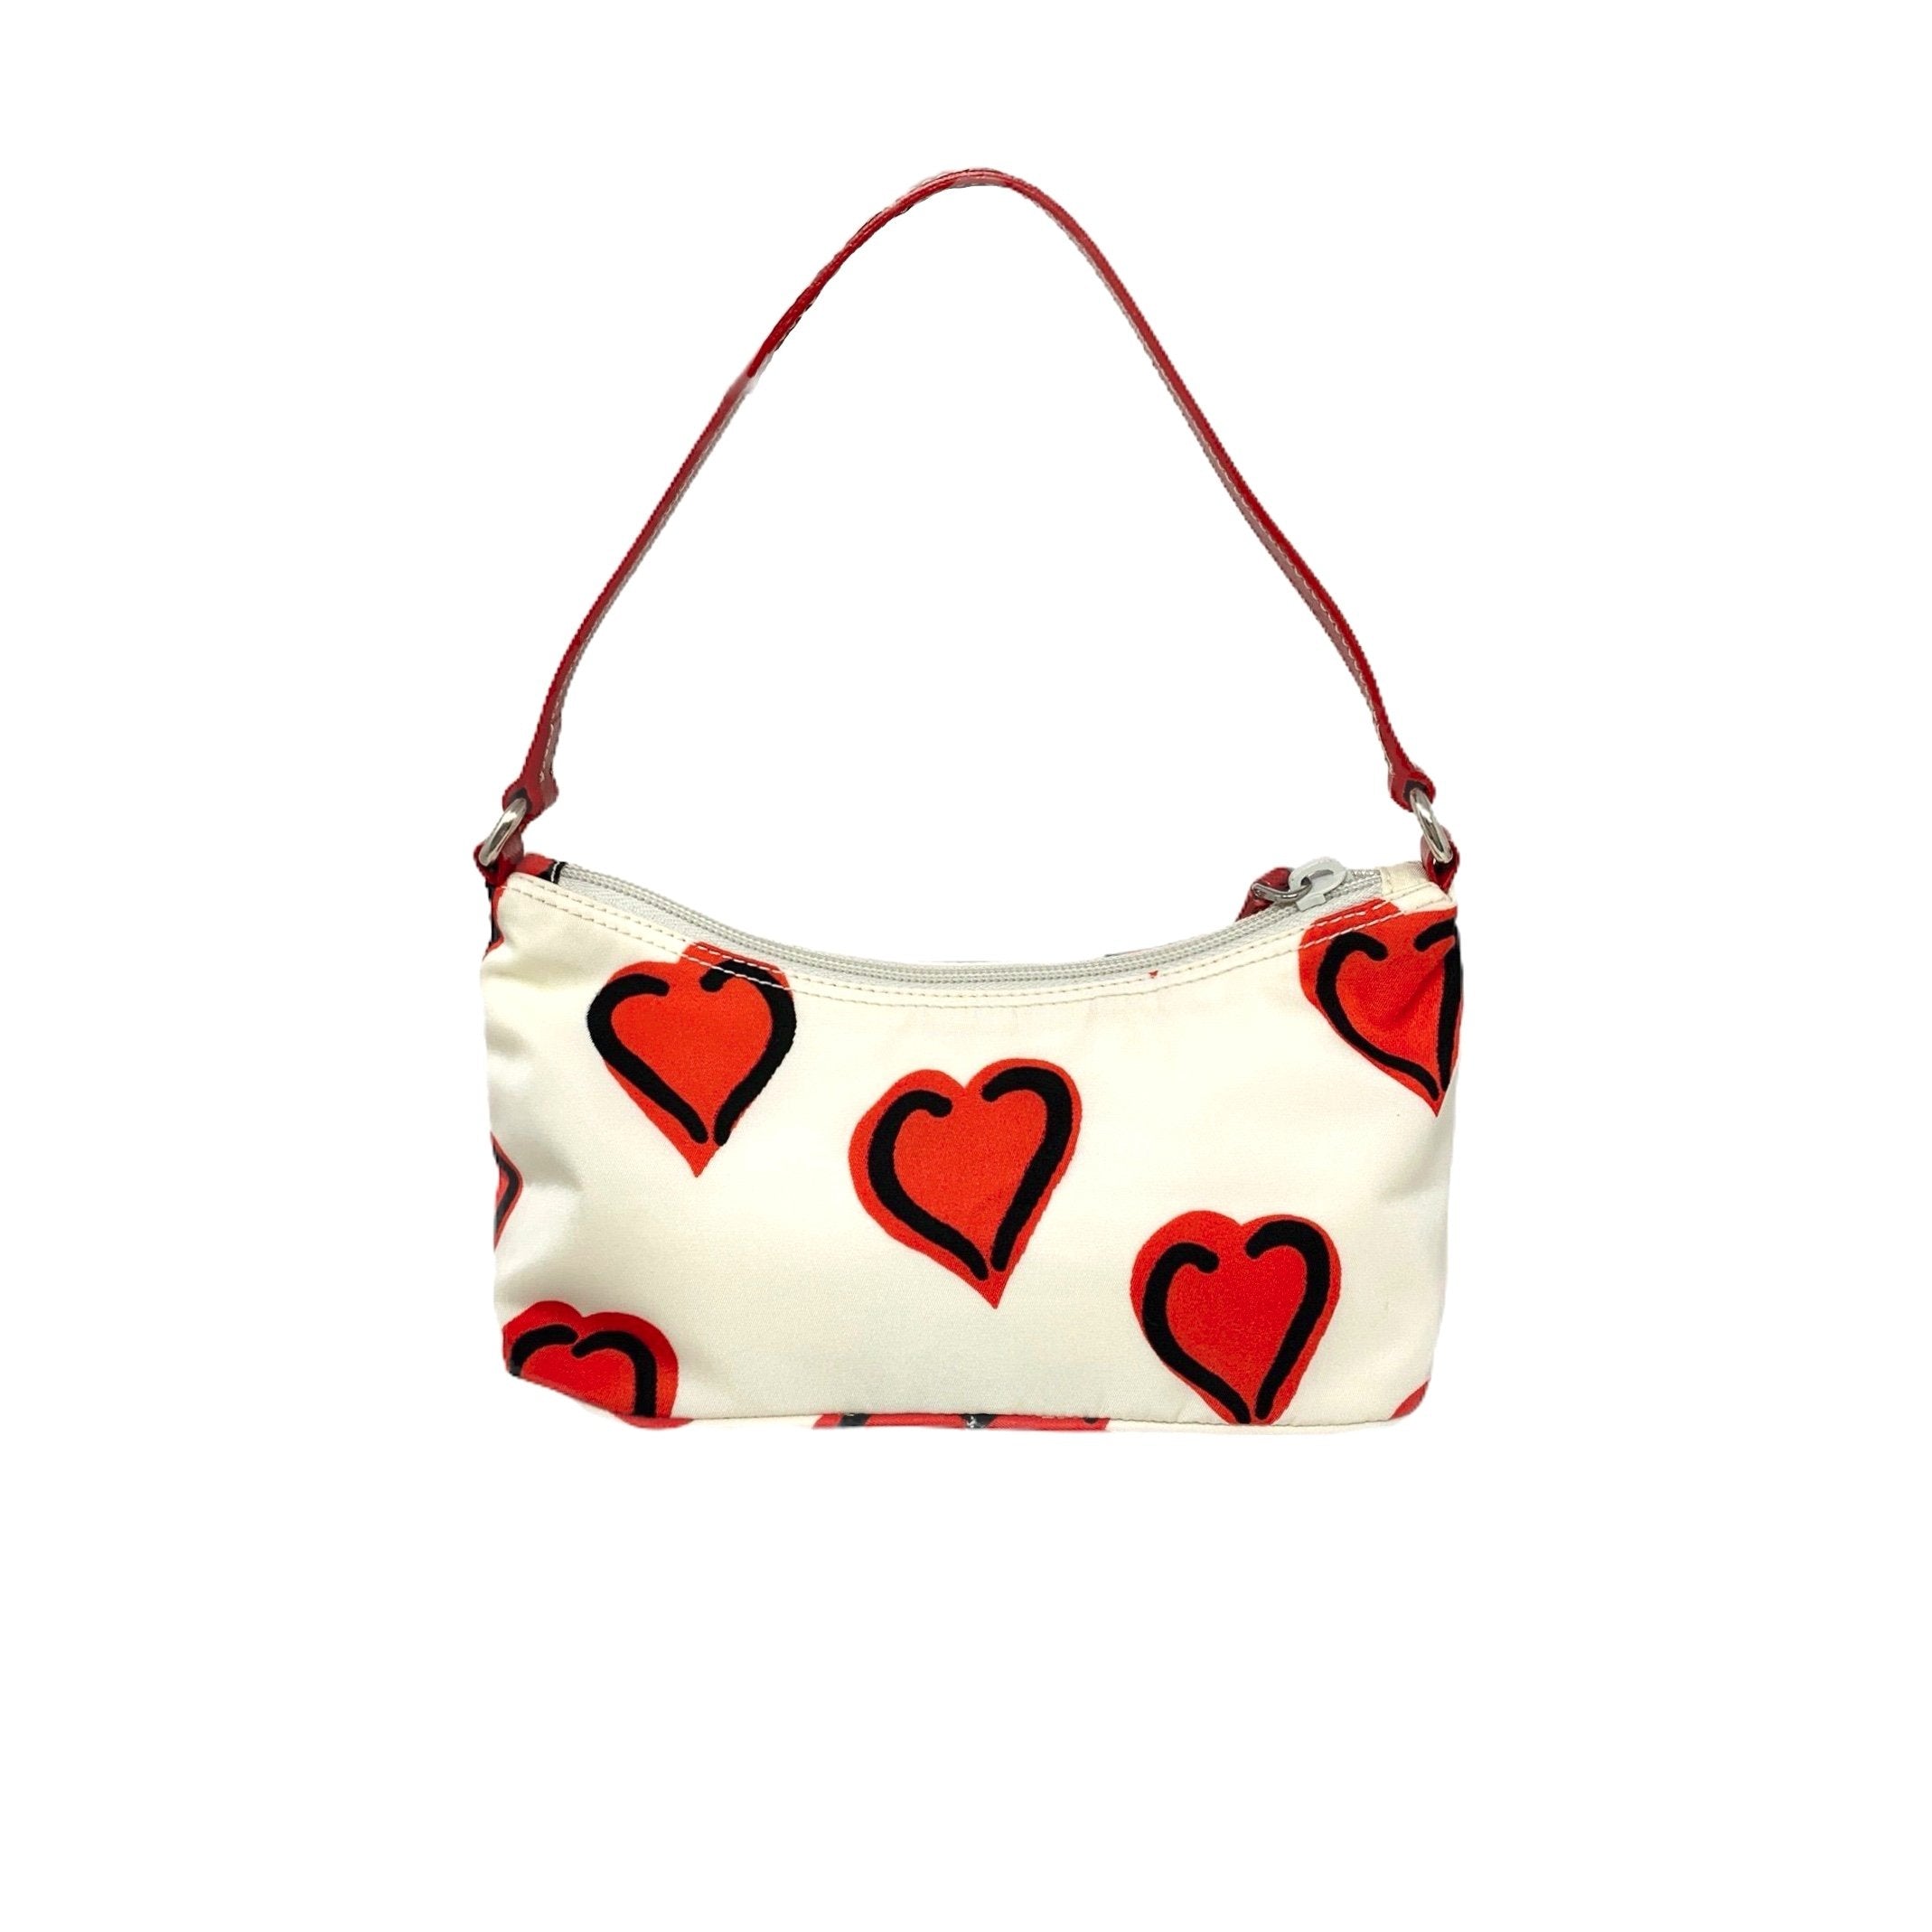 𓃭 on X: Prada white heart-shaped bag  / X